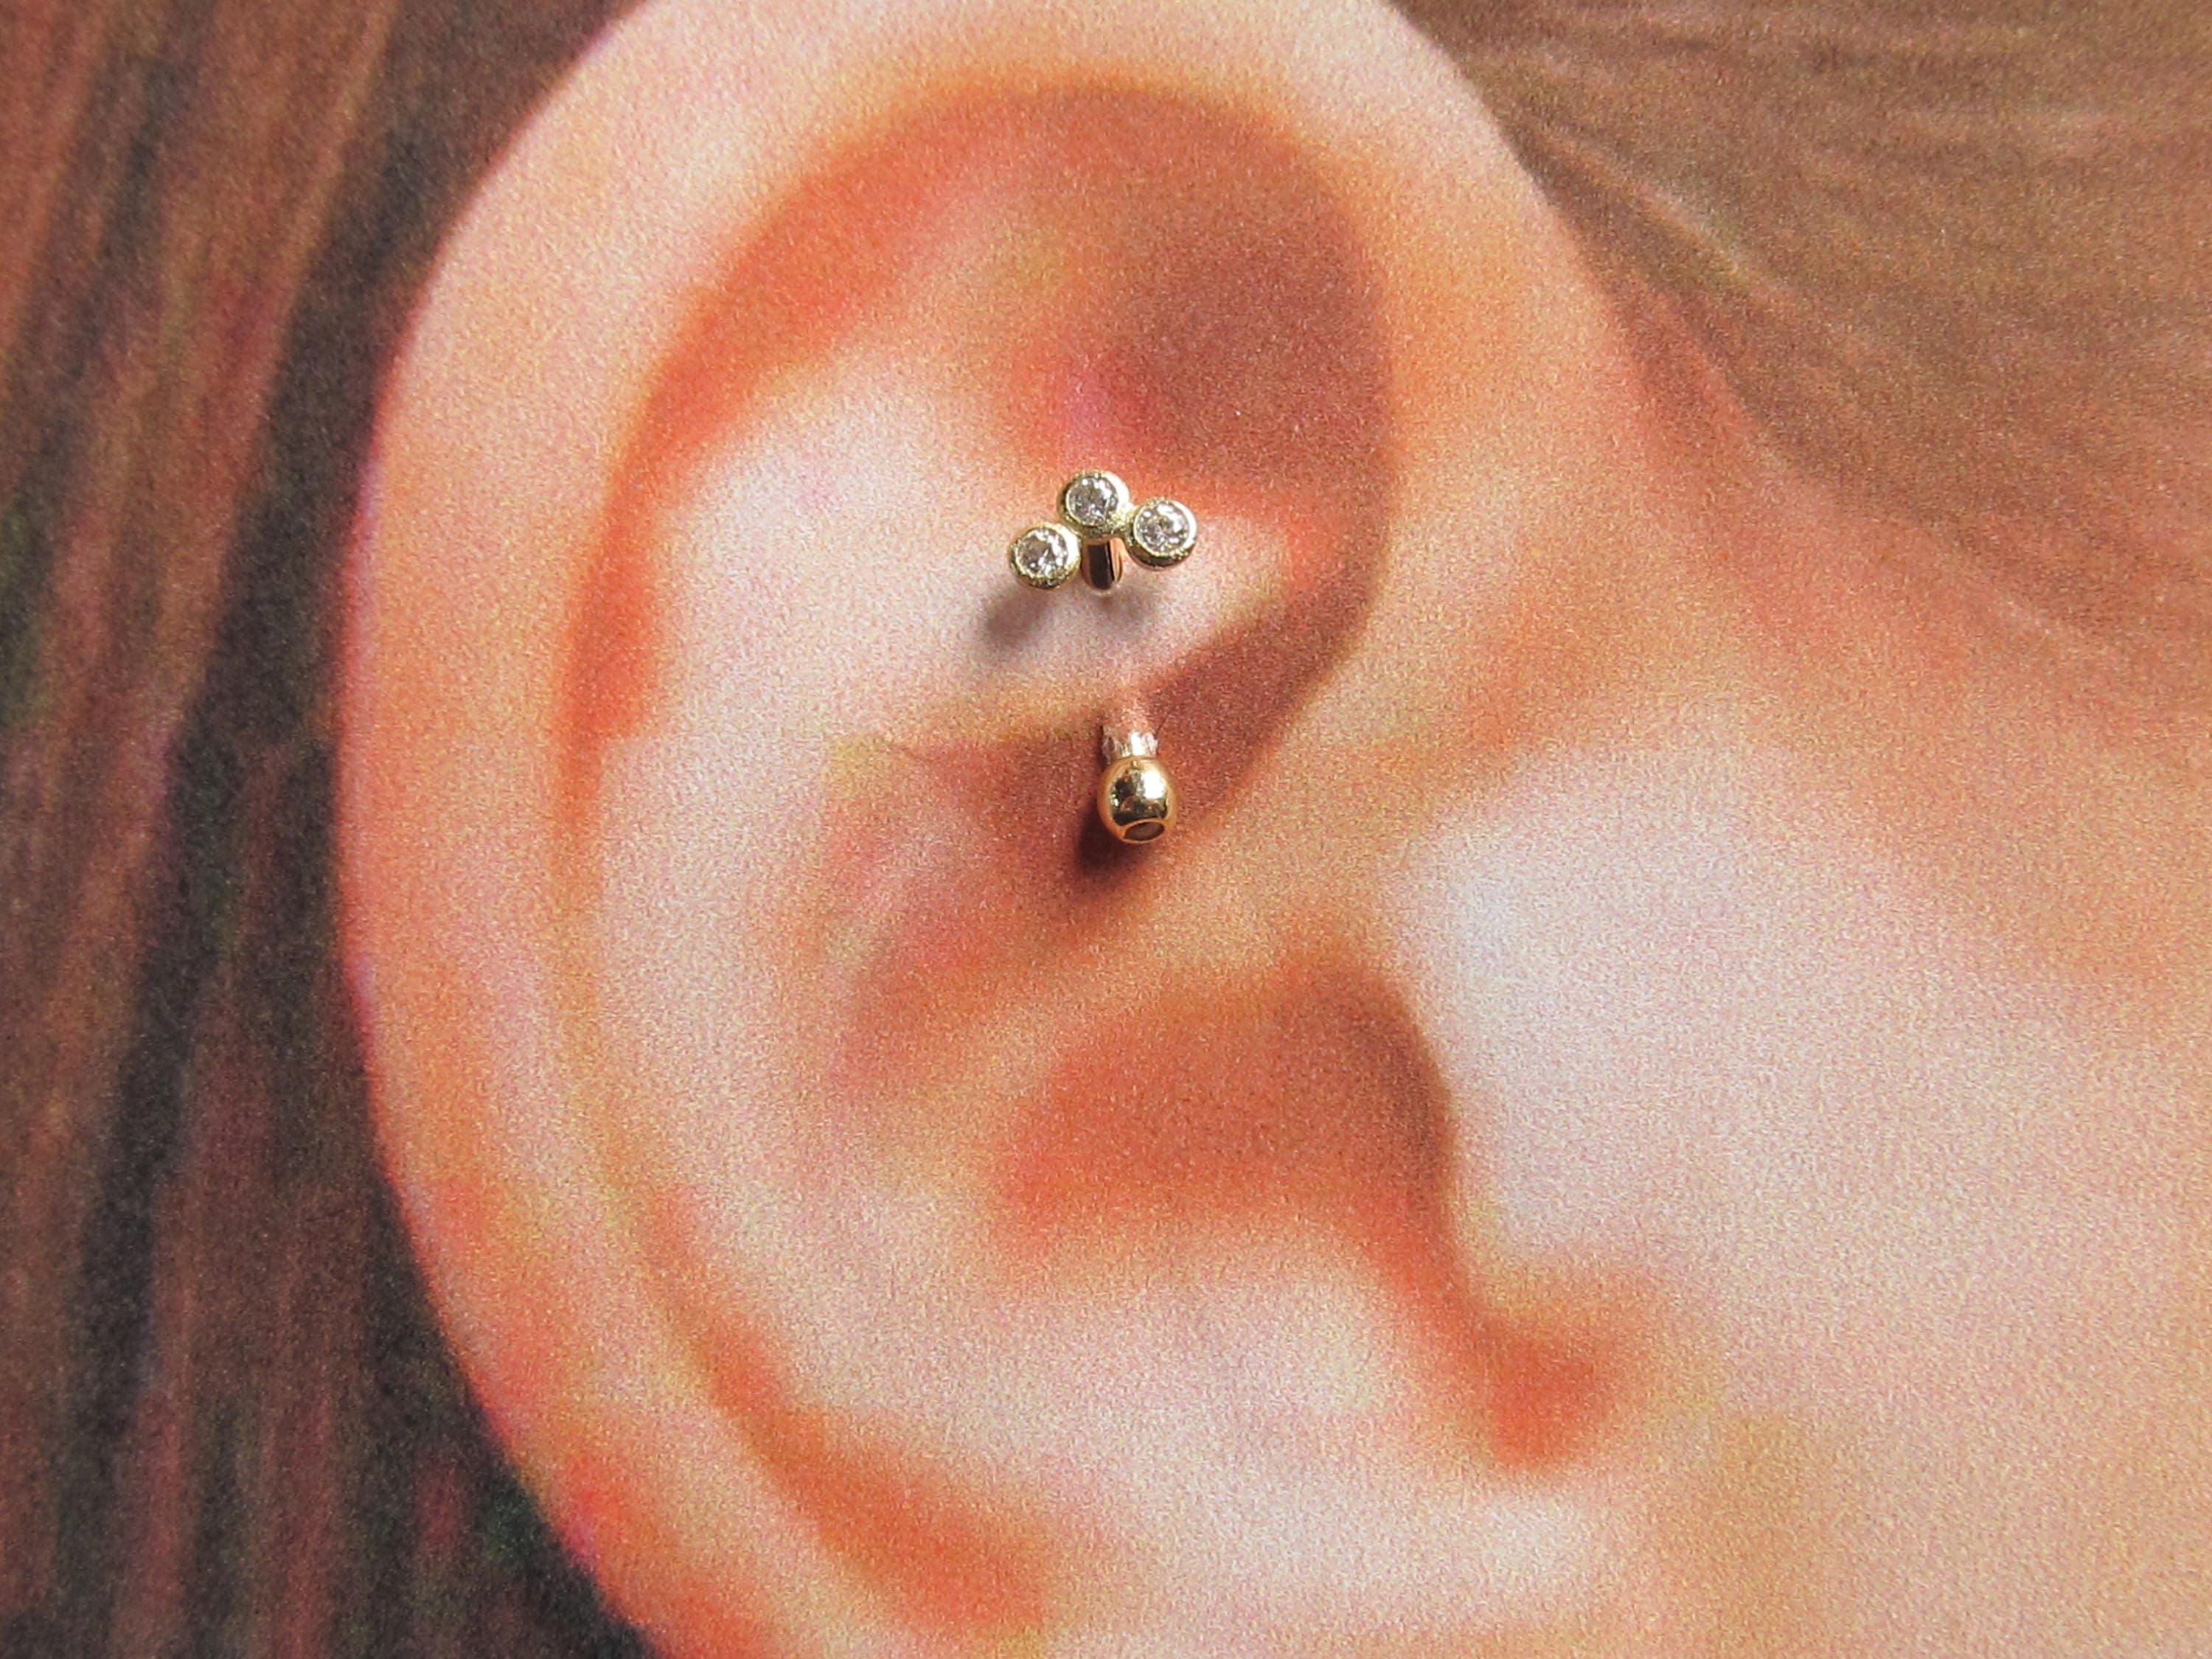  bodyjewellery 4Pcs 16g 12mm Curved Barbell Snug Helix Earrings  Rim Bridge Pinna Eyebrow Ear Lobe Anti Tragus Cartilage Halfball BXAT :  Clothing, Shoes & Jewelry